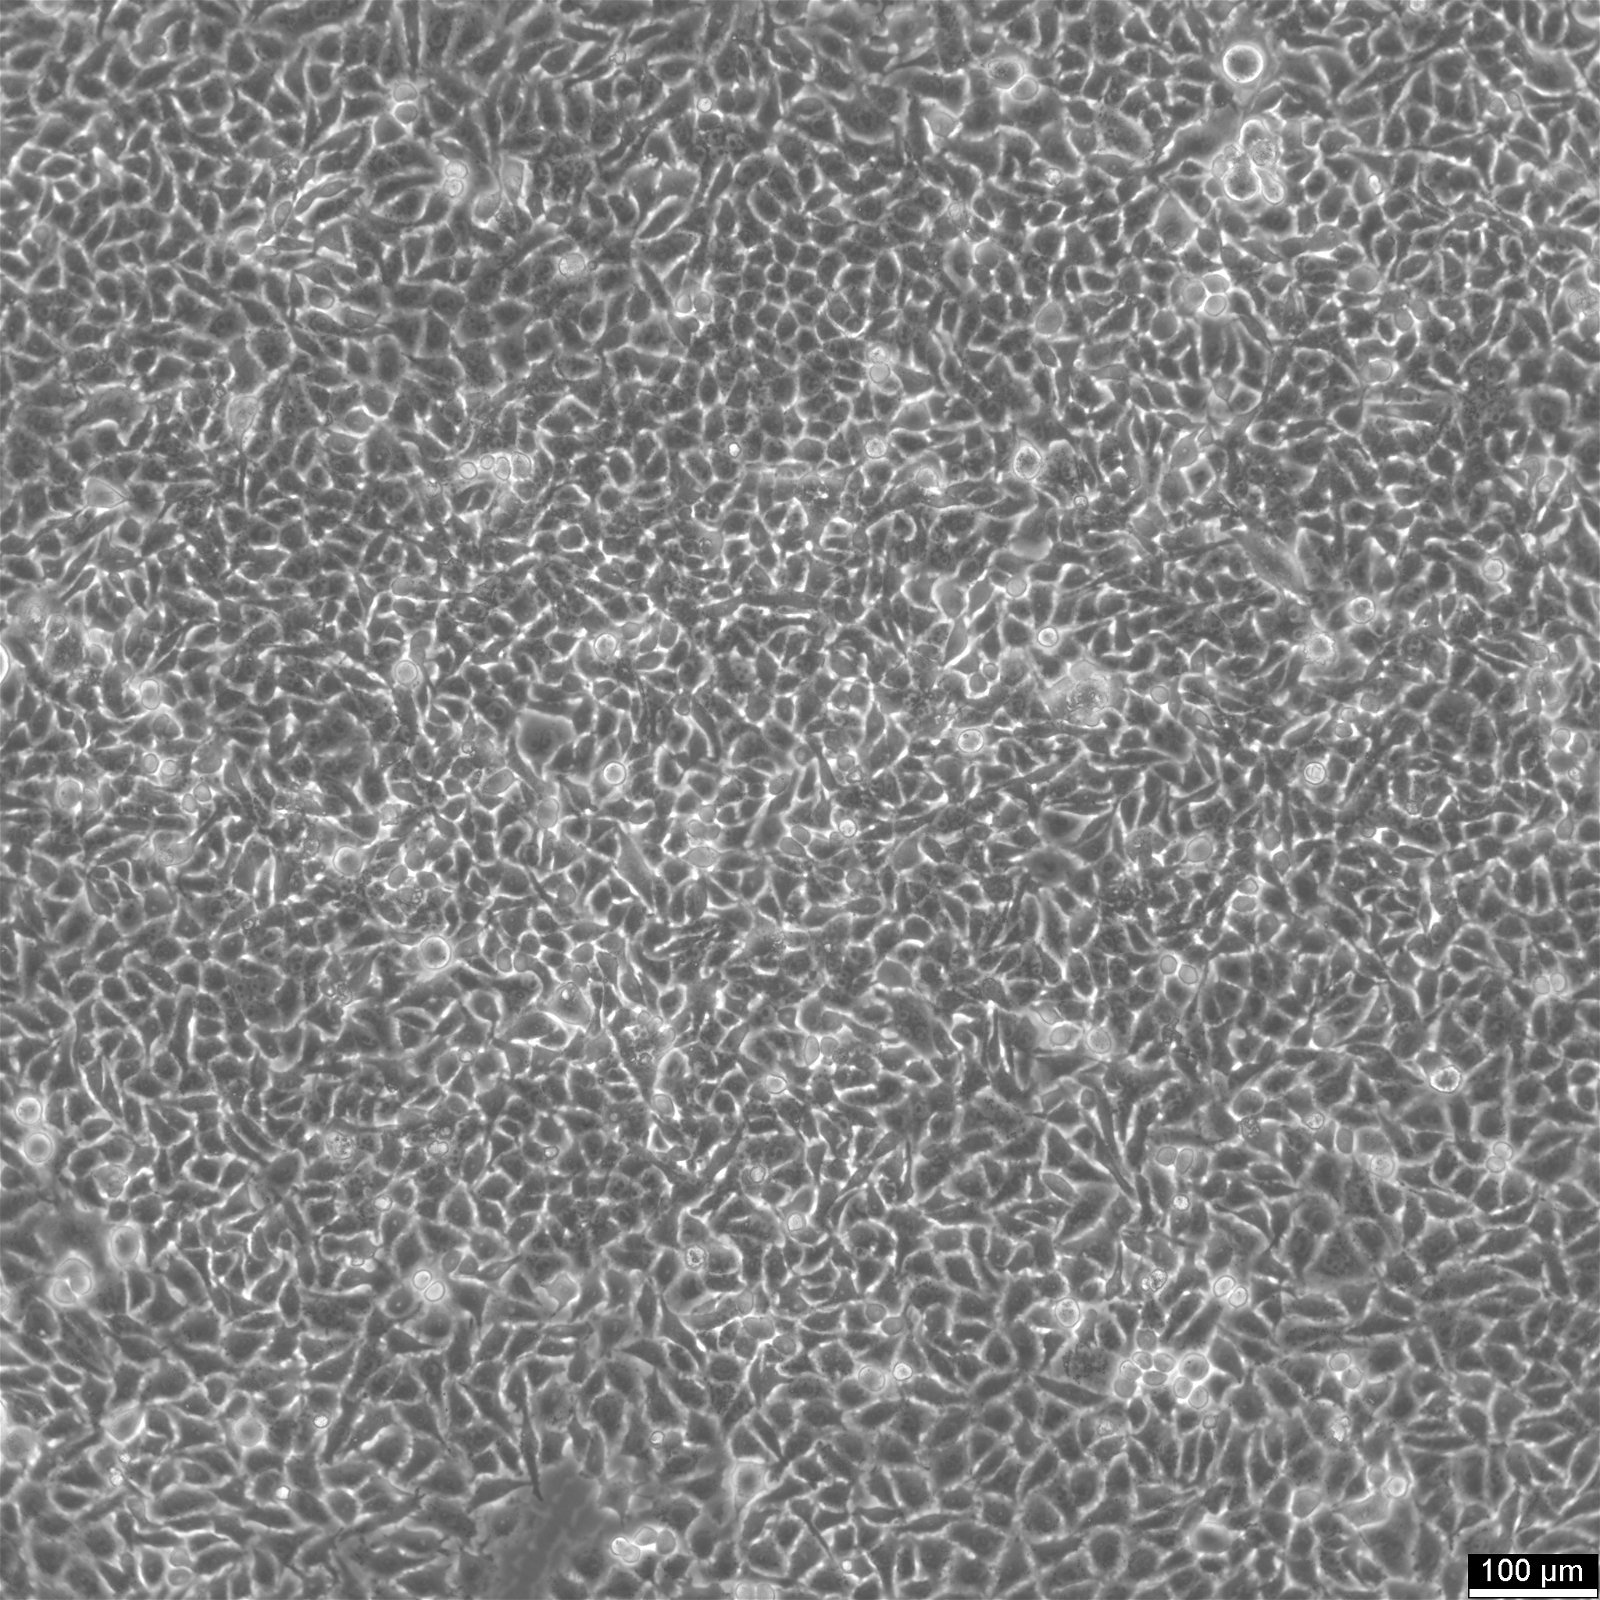 HK-CRISPR-Nup188-mEGFP #11-092 Zellen